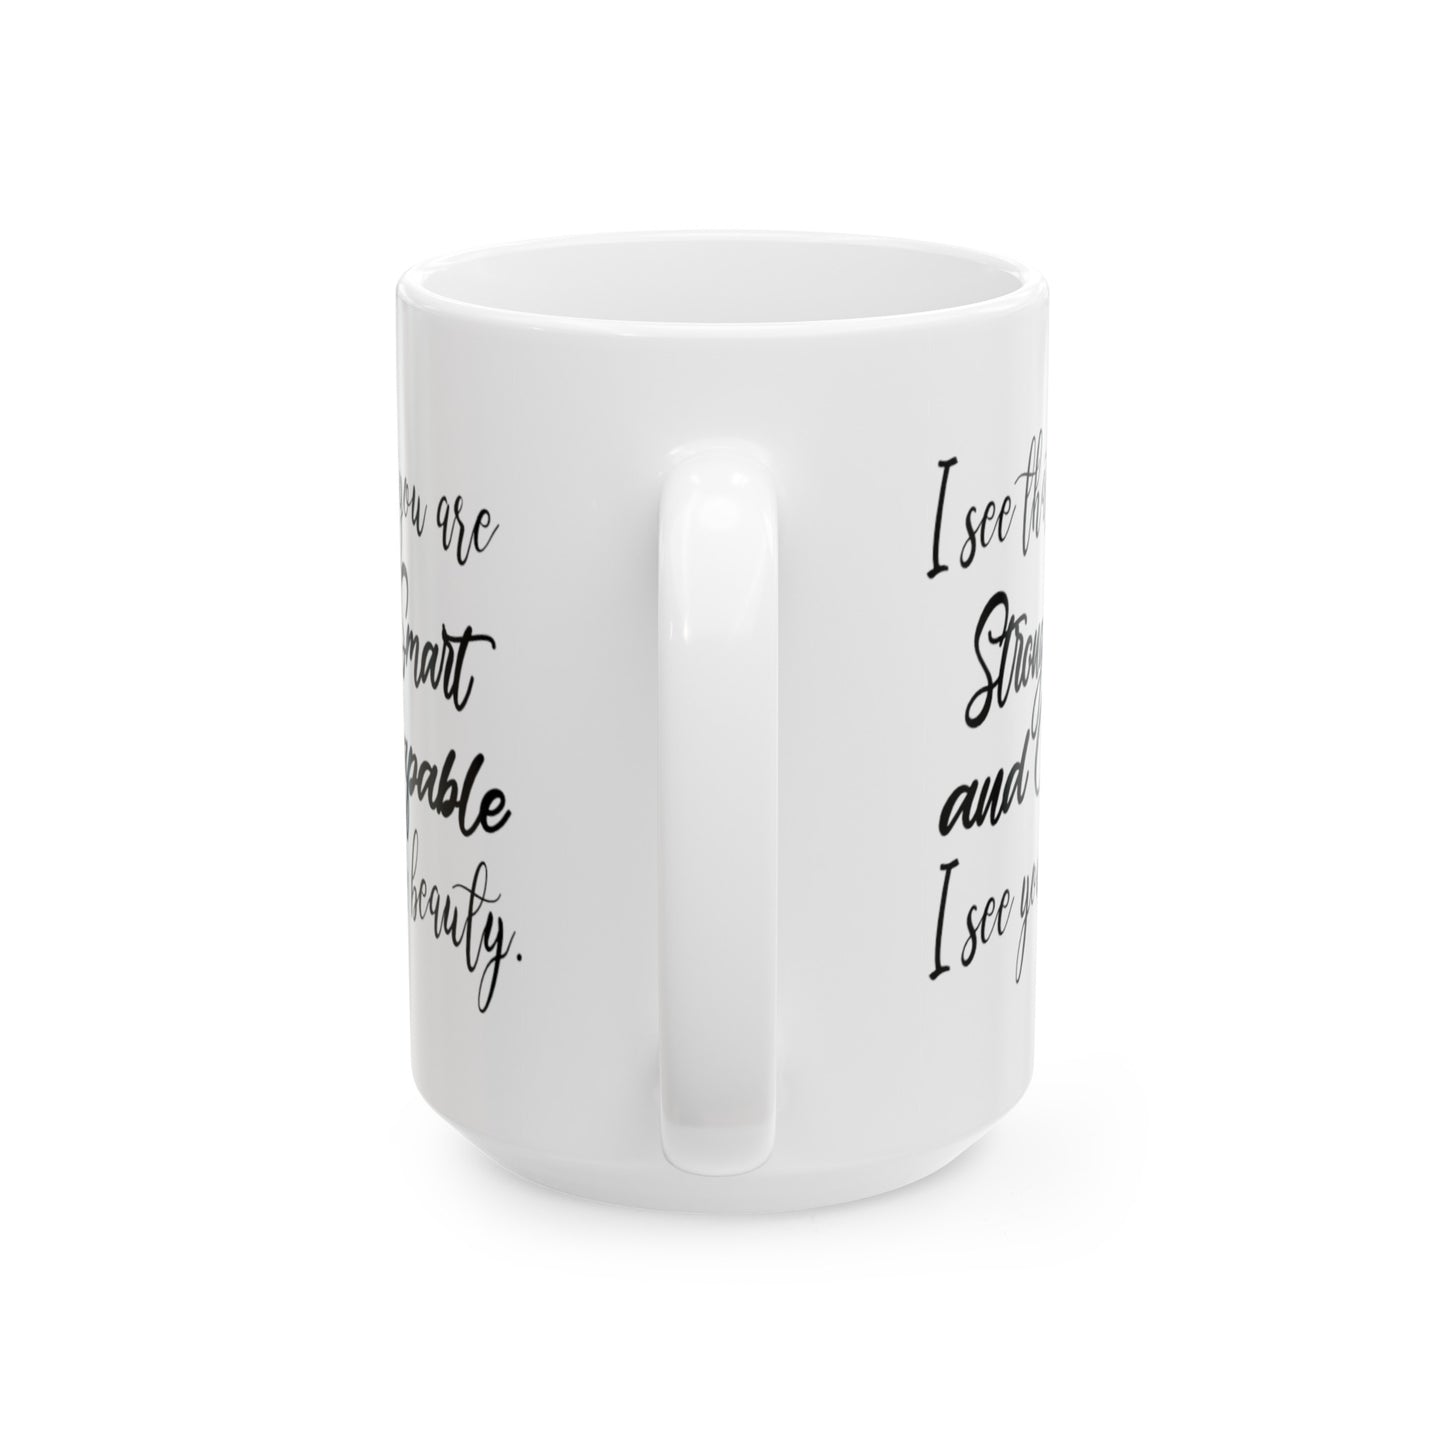 Smart Strong Capable Coffee Mug - Double Sided White Ceramic 15oz by TheGlassyLass.com